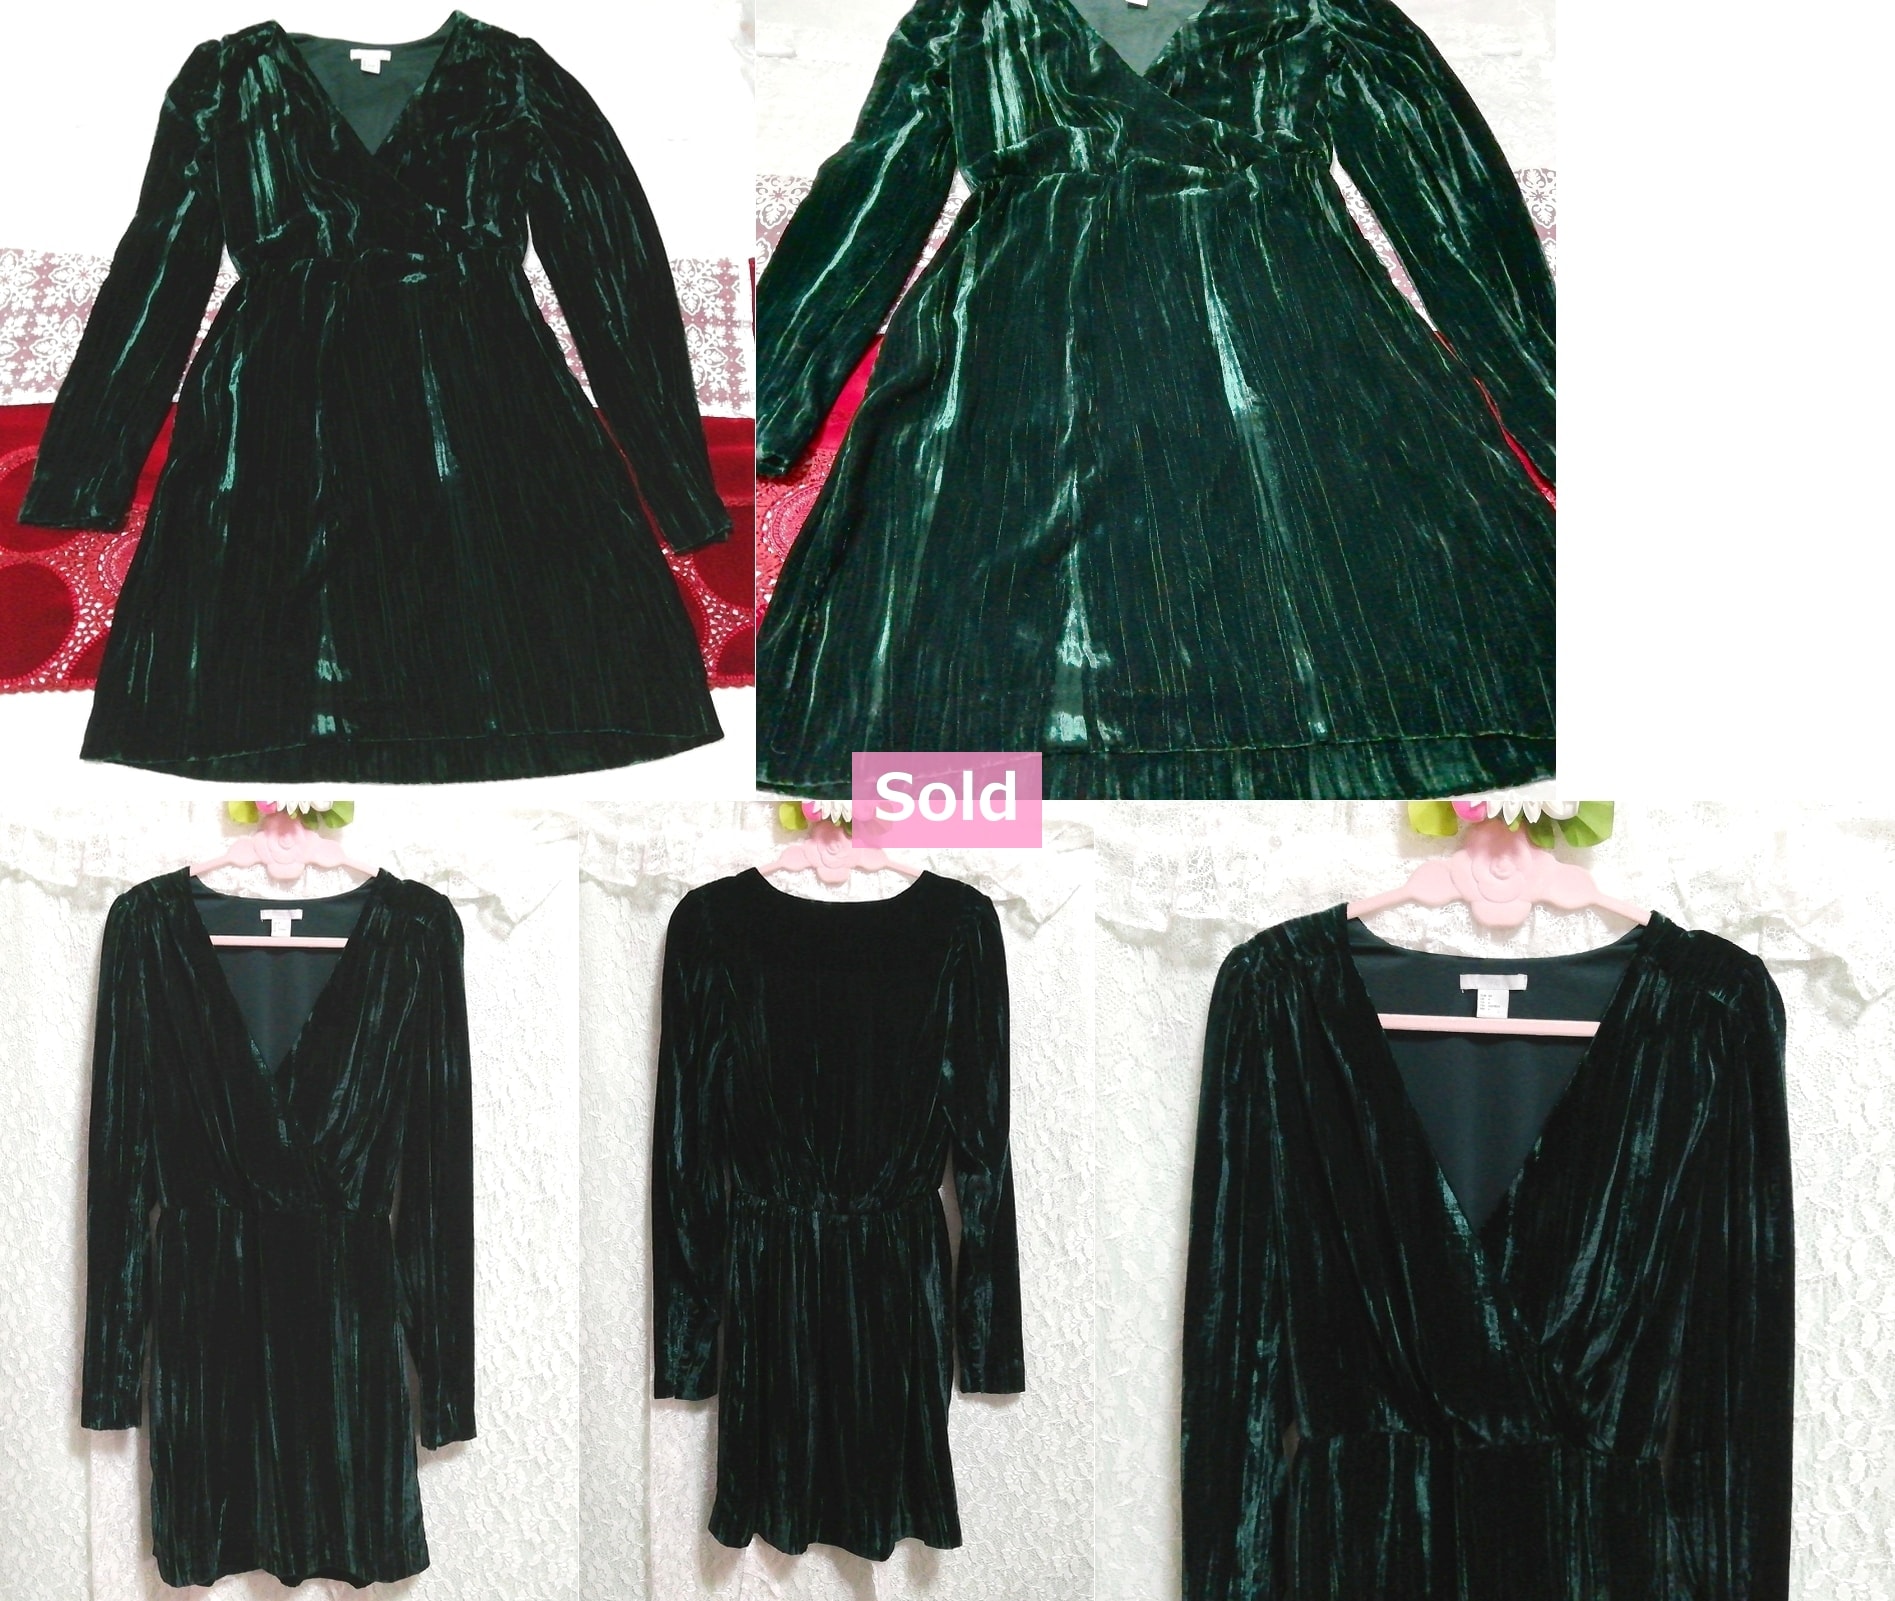 Green velour negligee nightwear long sleeve dress, fashion & ladies fashion & nightwear, pajamas